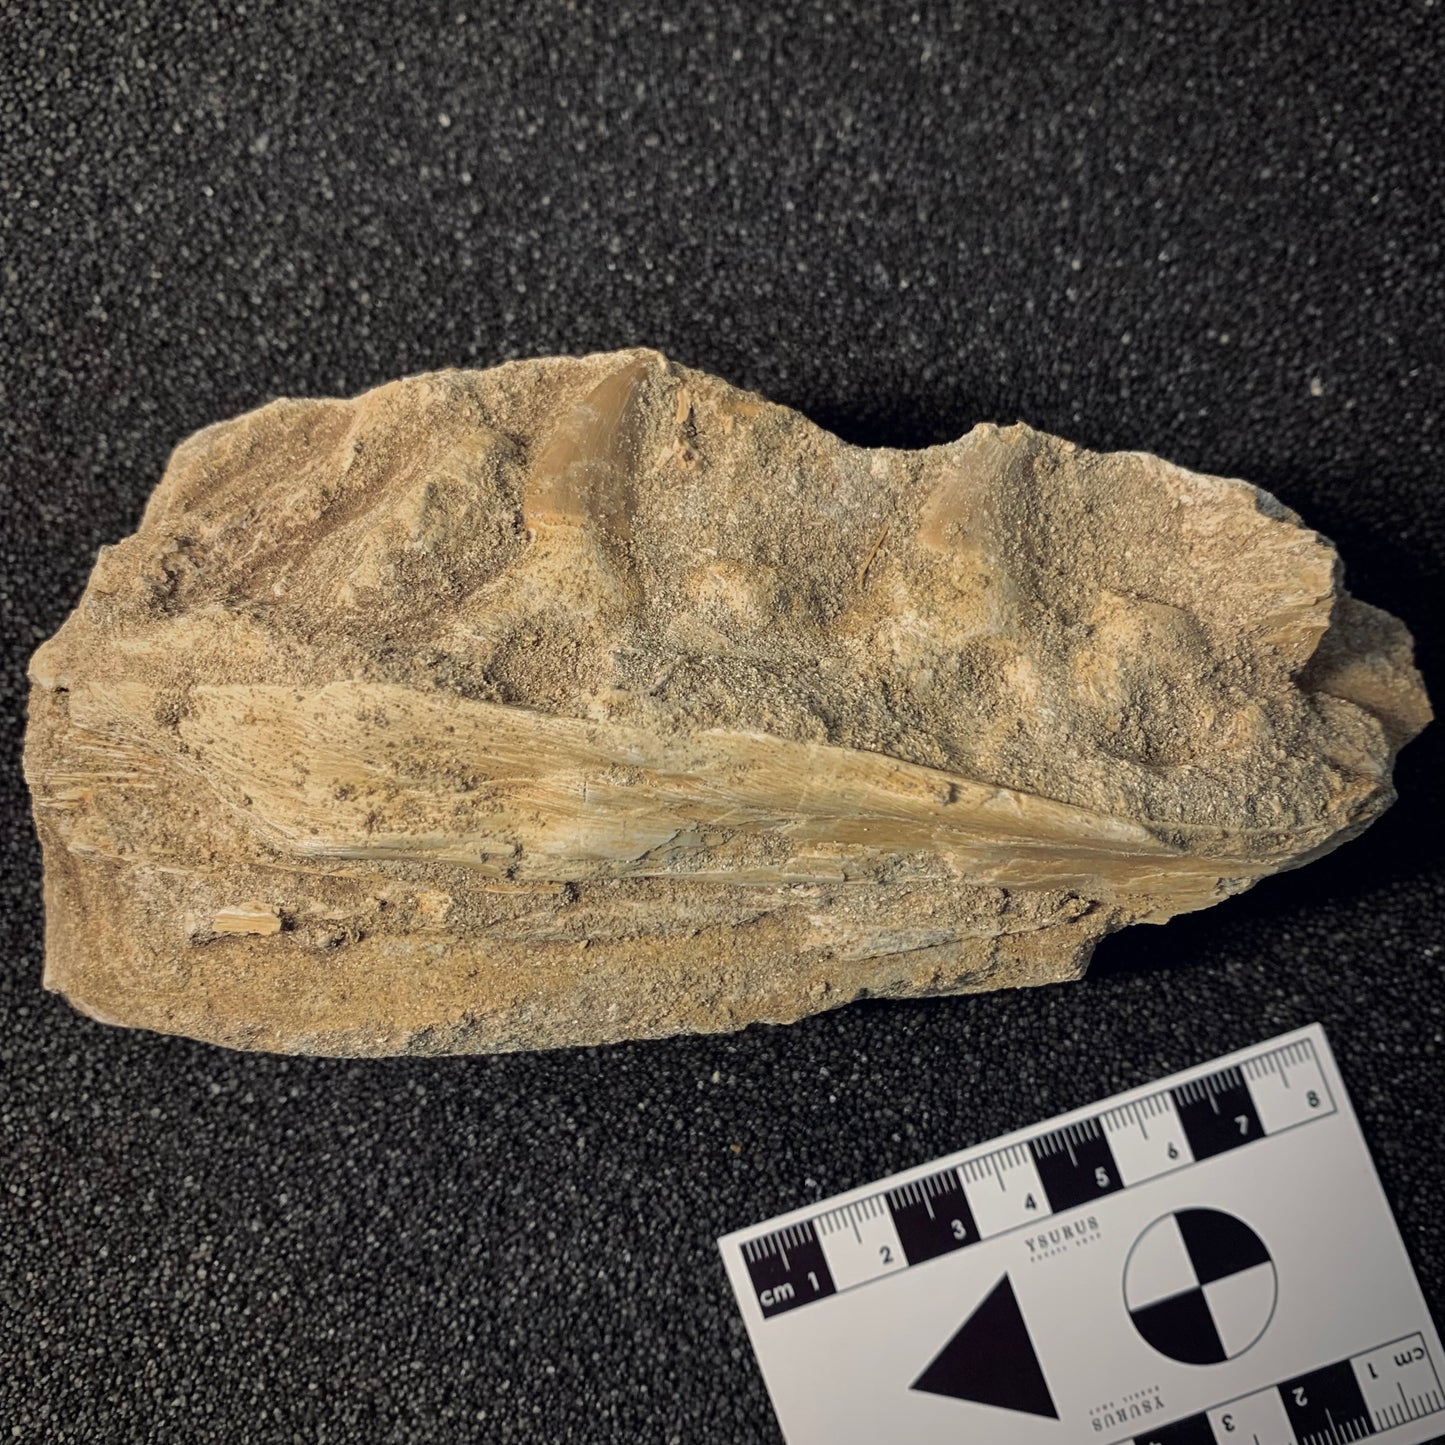 FNP12 | Fossile da preparare | Mosasauro | Prognathodon sp.